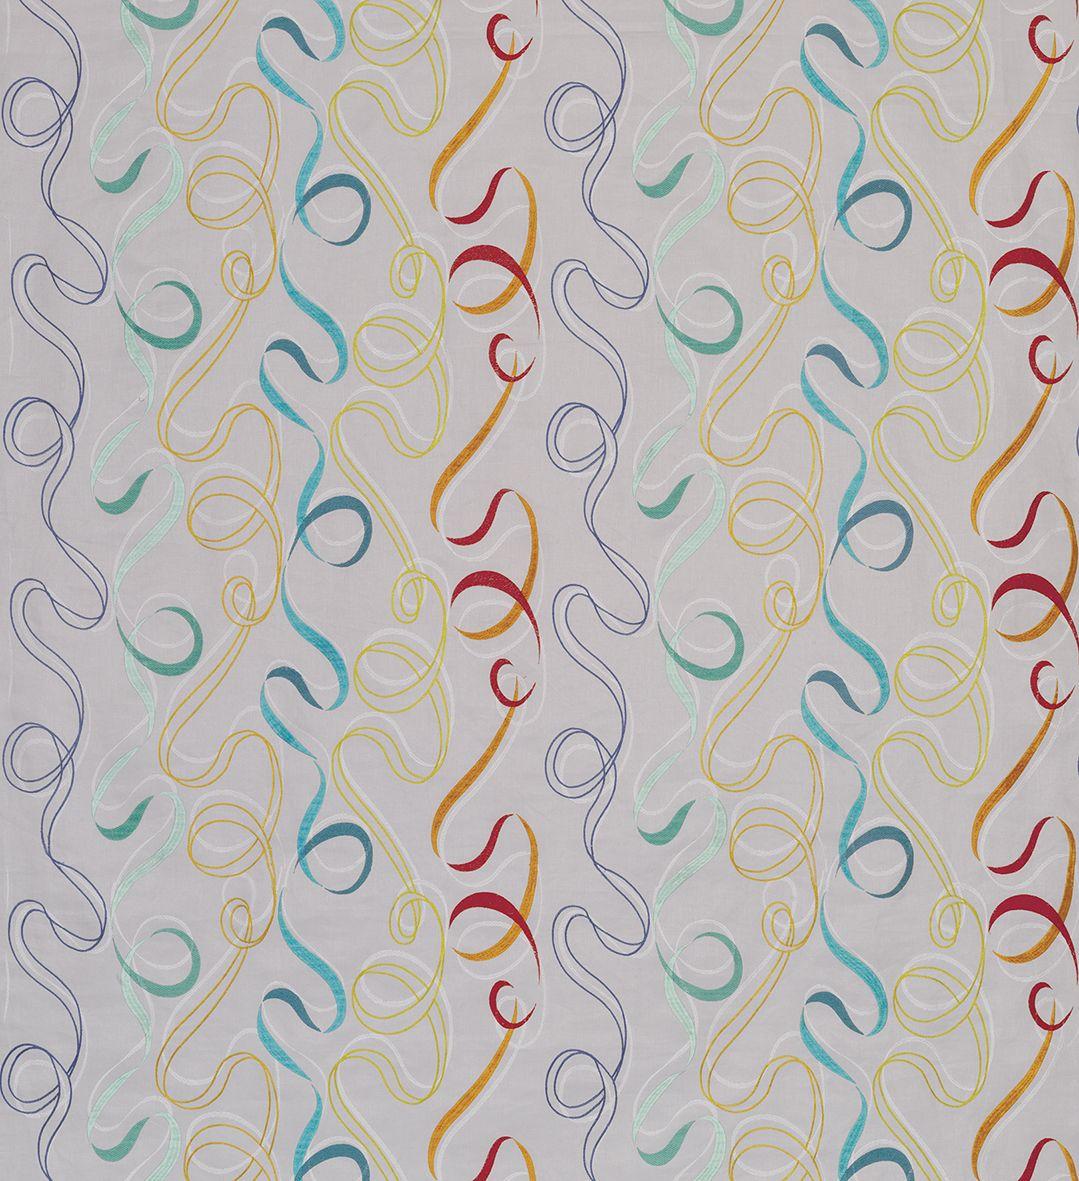 Ткань Osborne & Little Manarola Fabrics f7179-01 